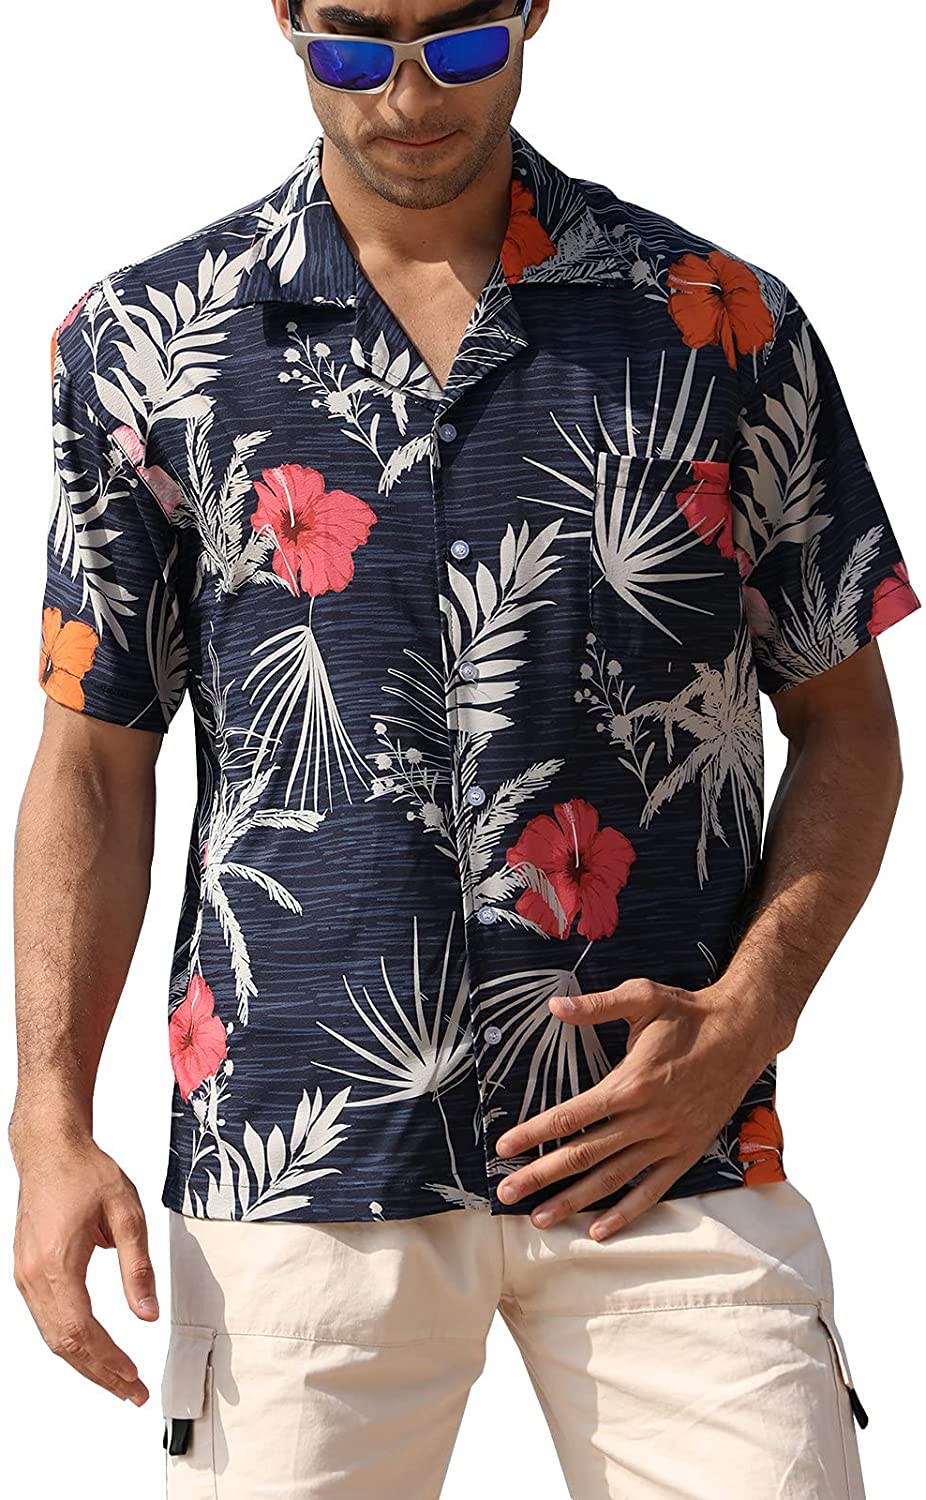 ZHPUAT Men's Funky Hawaiian Shirt Short Sleeve Button Down Tropical Print Shirts Beach Party Holiday… 